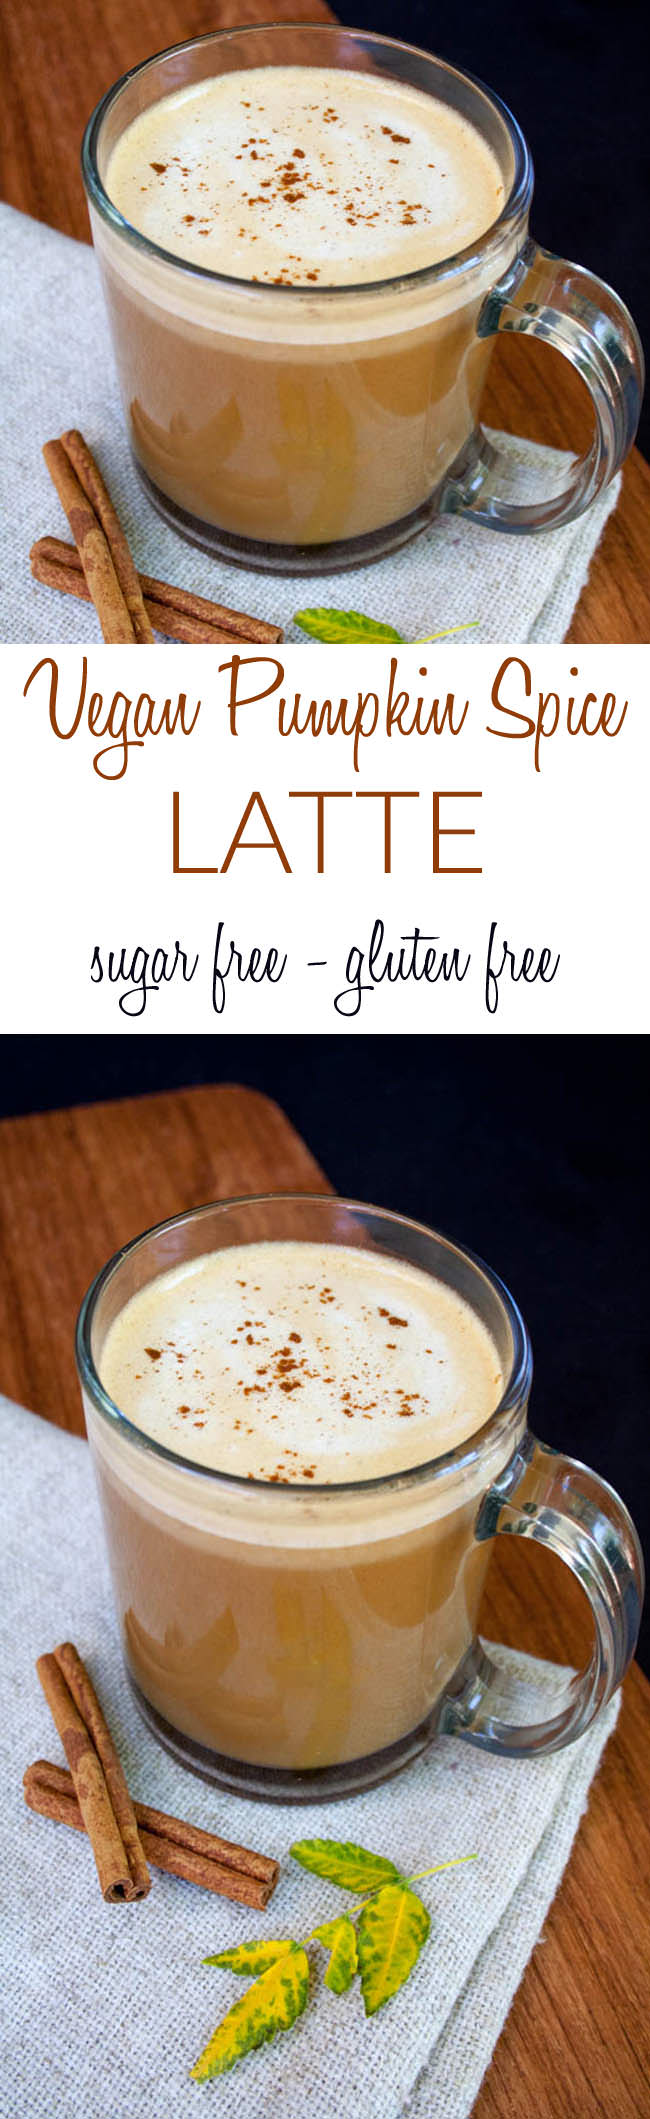 Vegan Pumpkin Spice Latte collage photo with text.